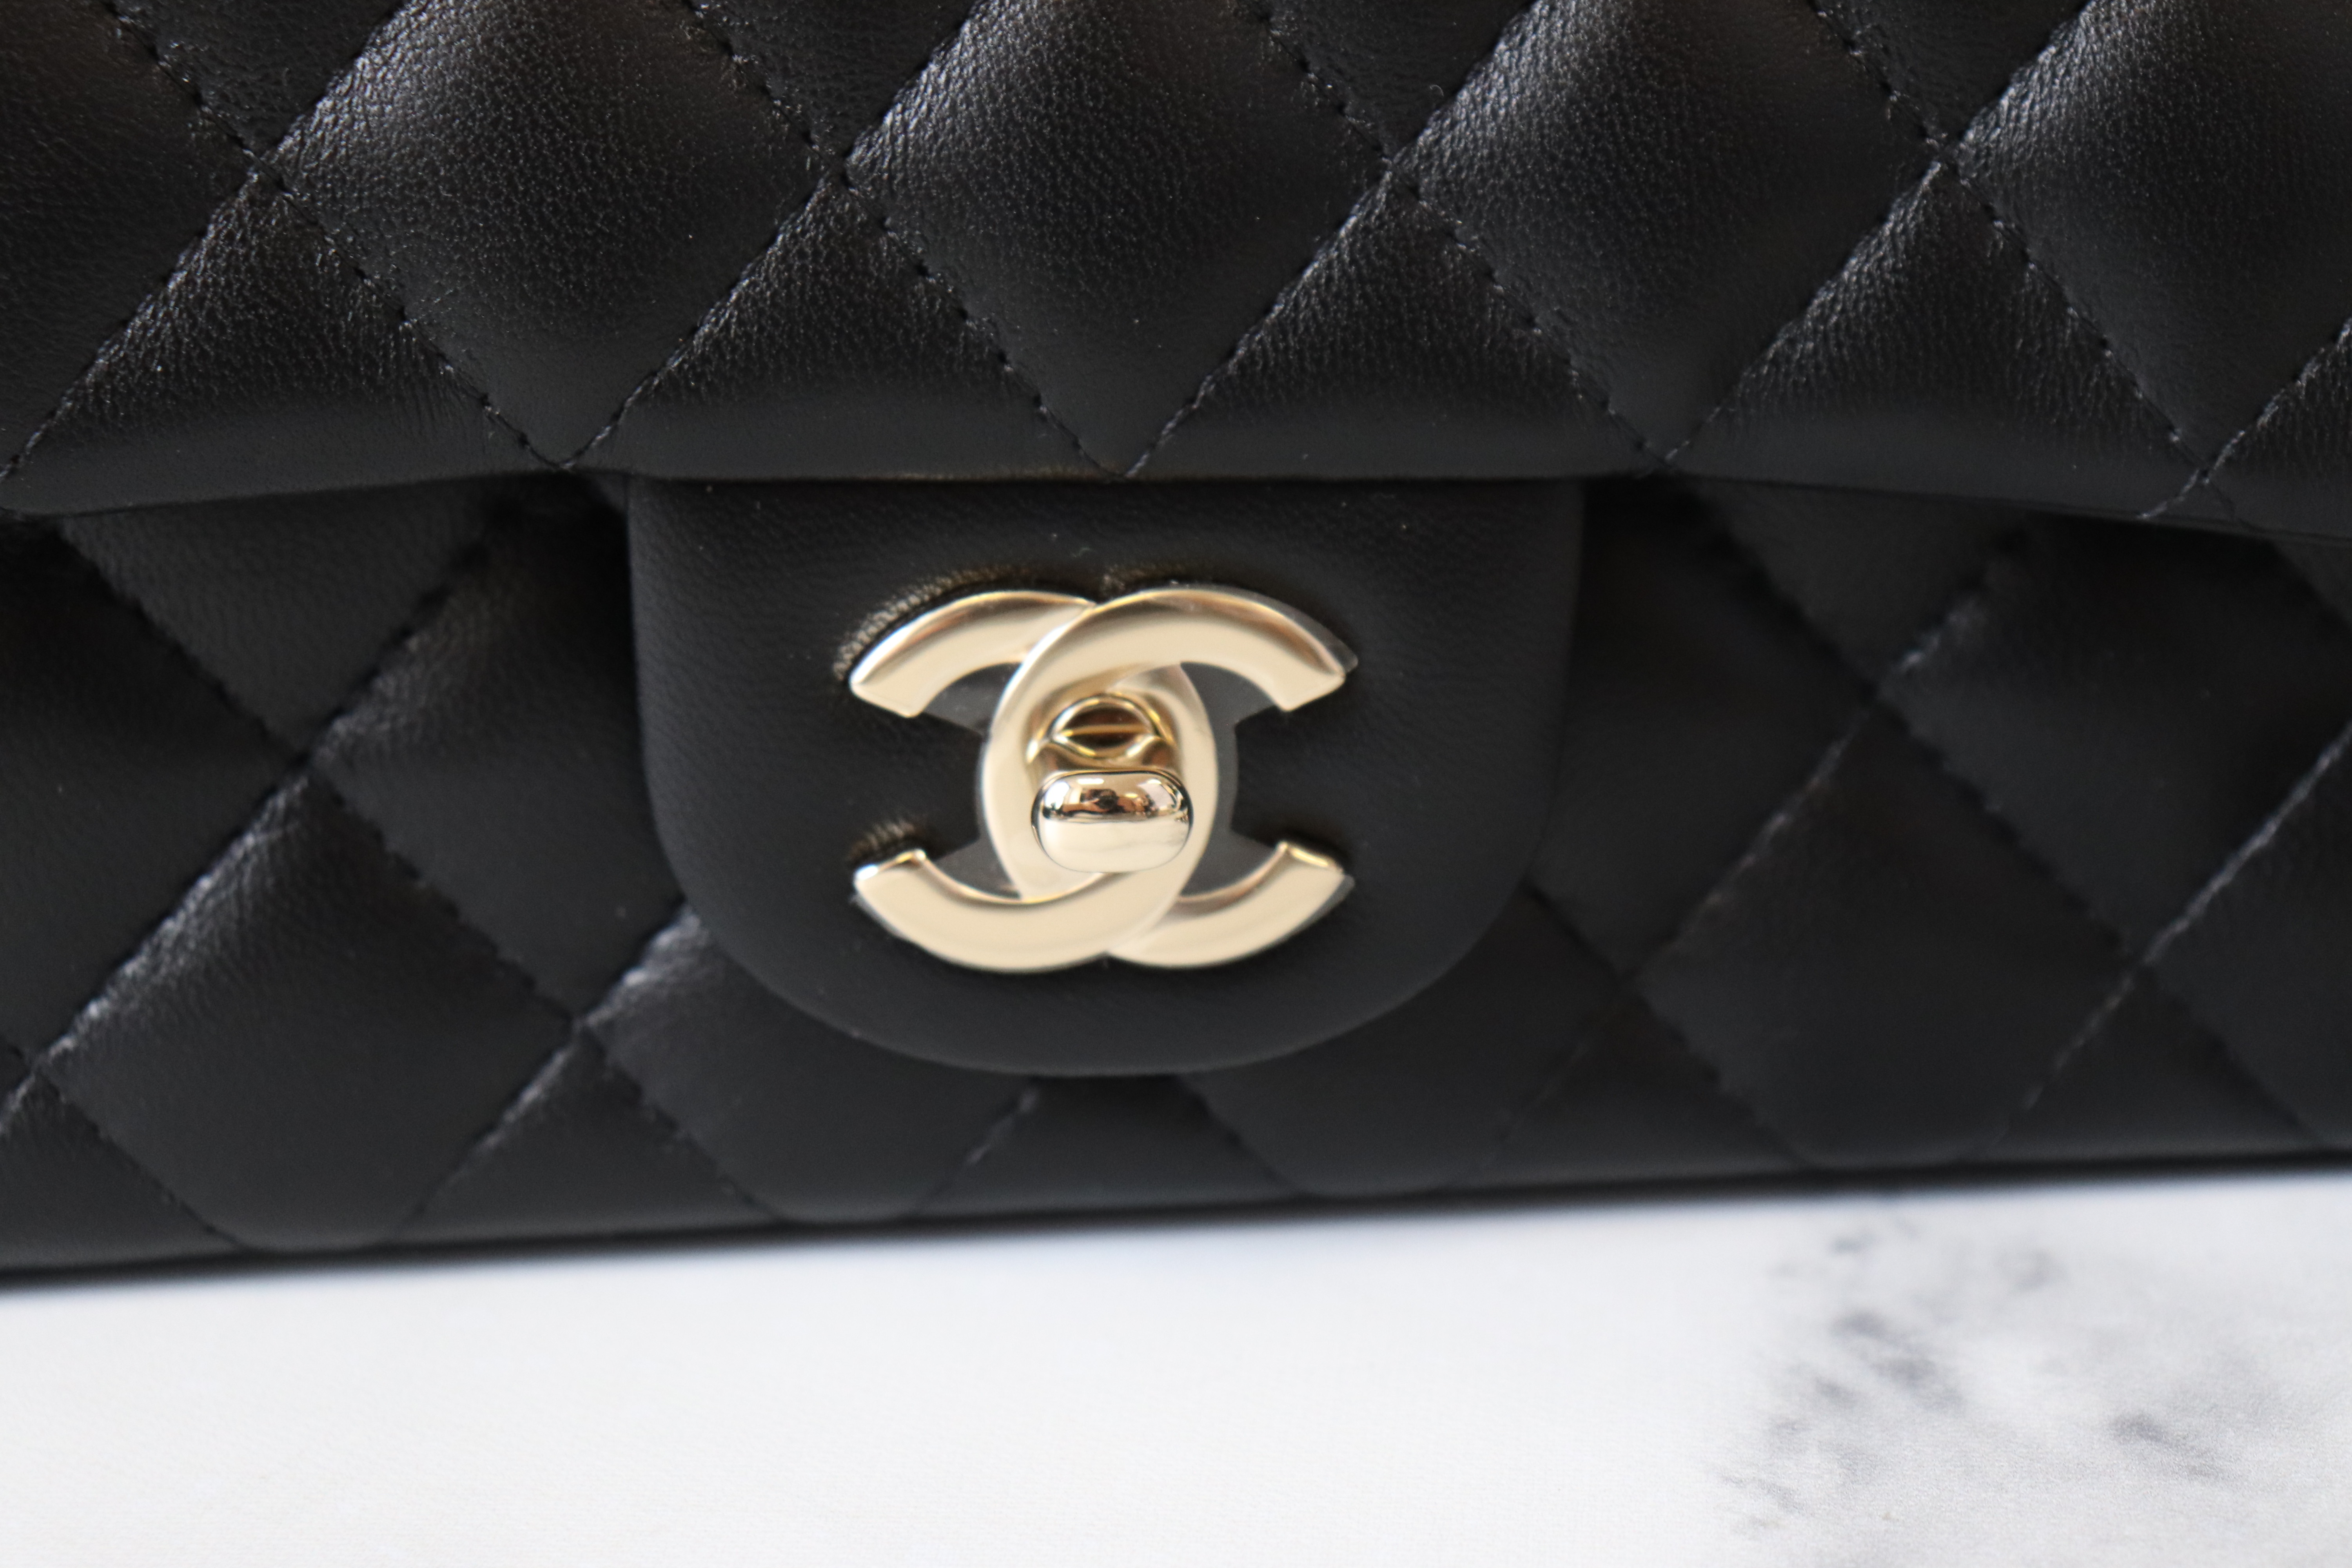 Chanel  Black Caviar Mini Rectangular Flap Bag with Light Gold